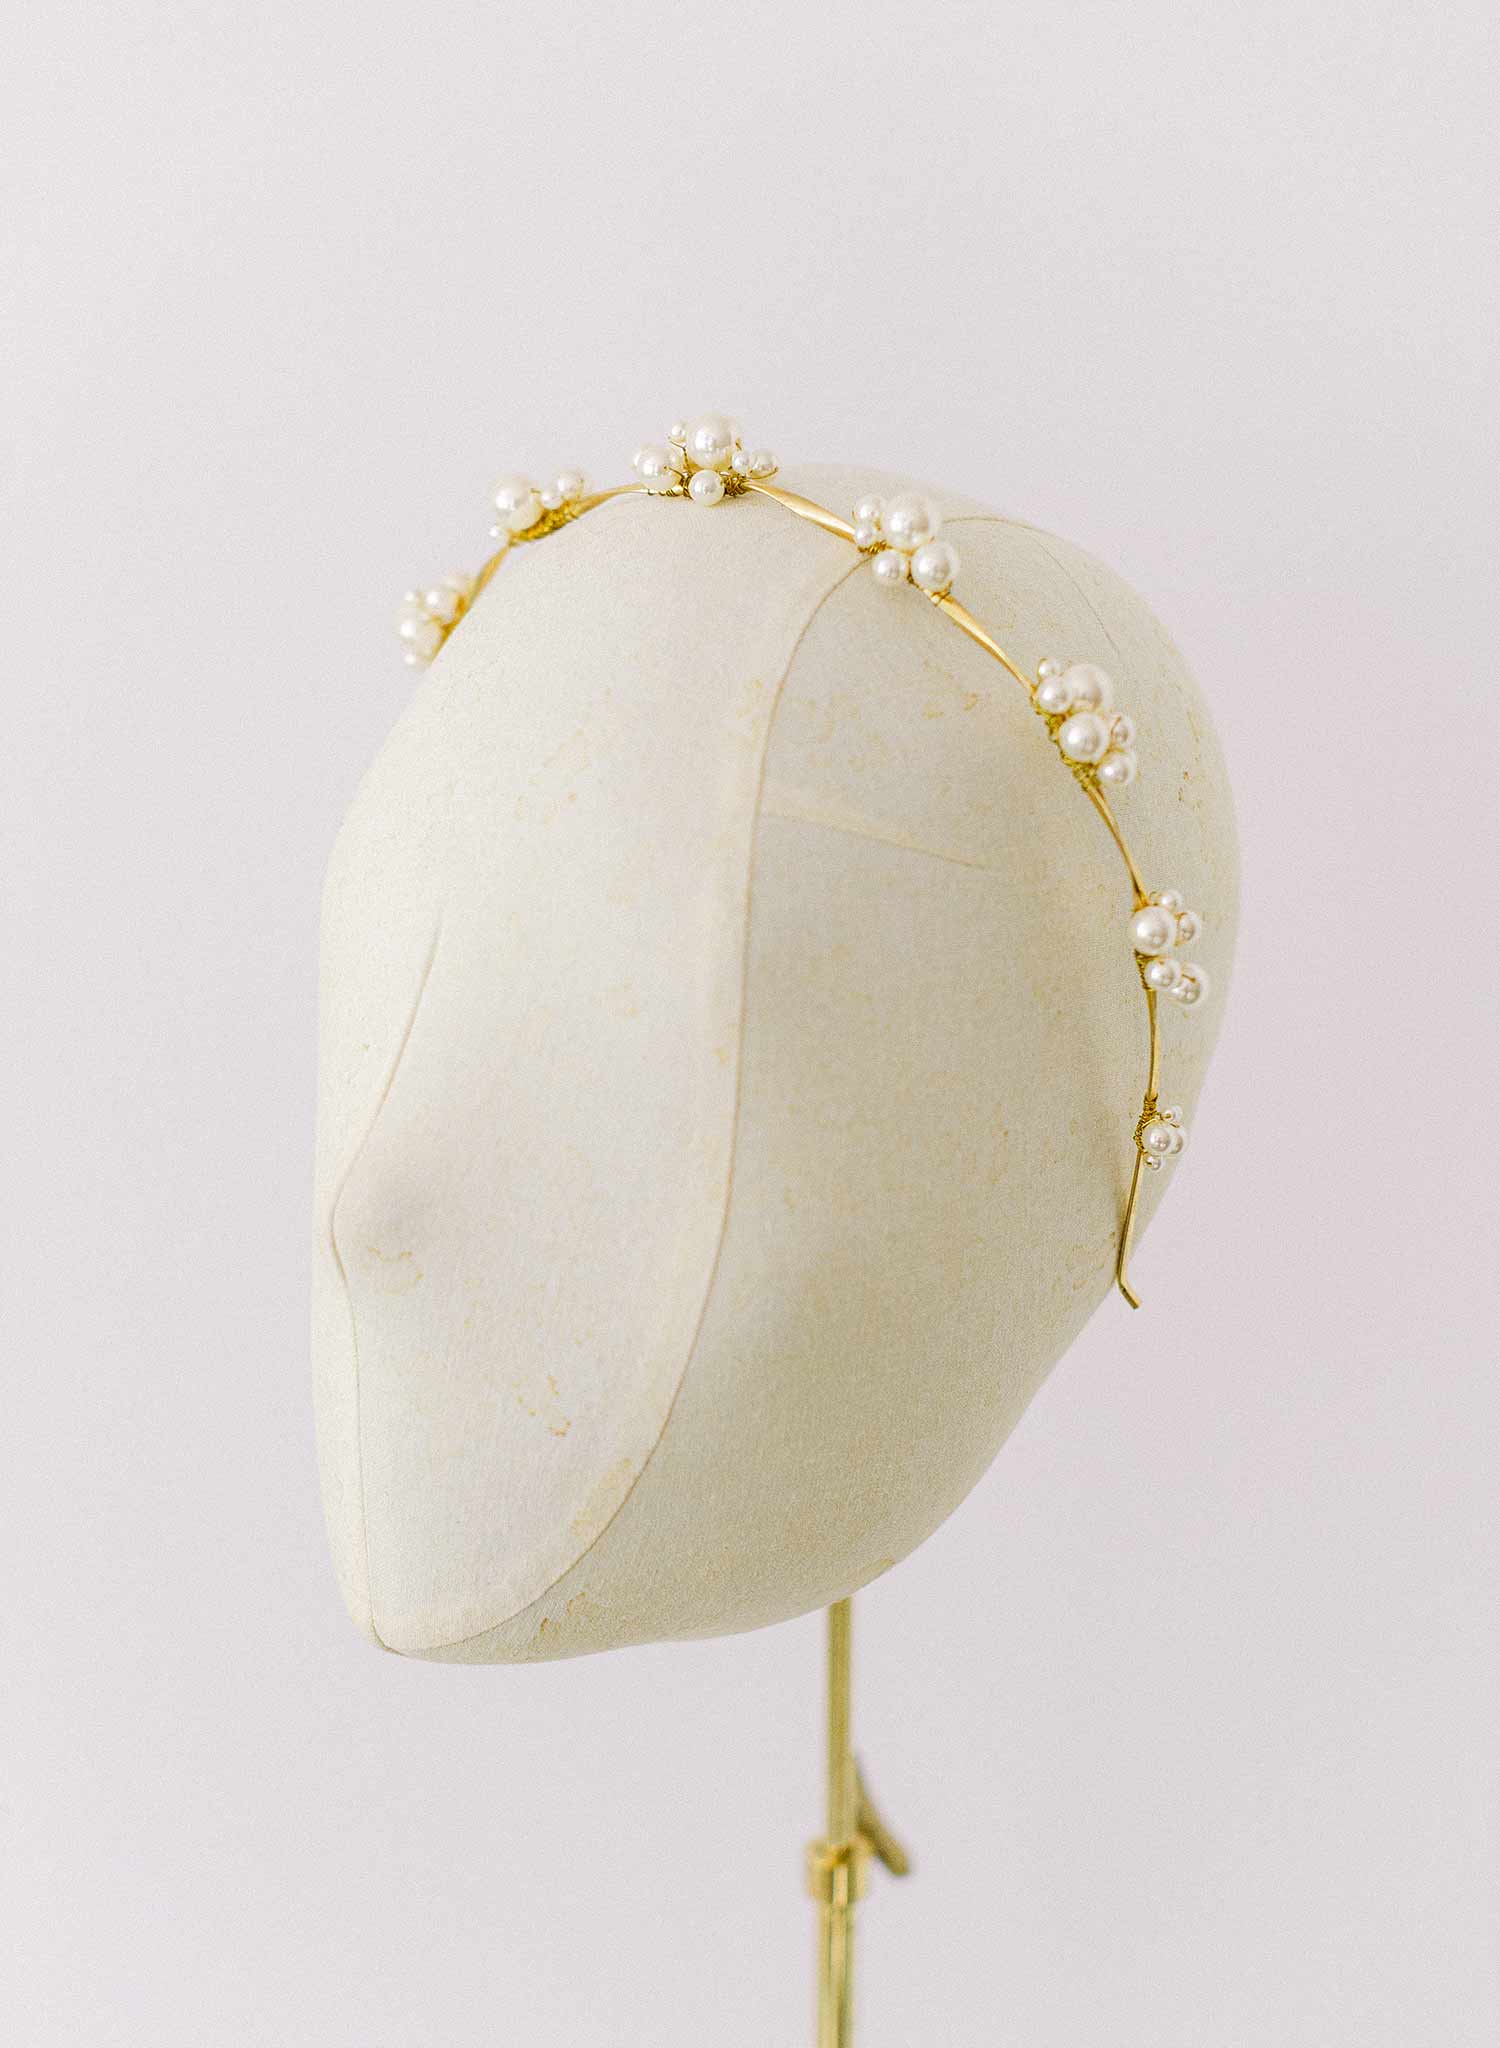 Bridal headpiece - pearl clustered headband with crystal birdcage veil -  Breeanna glam by Kezani